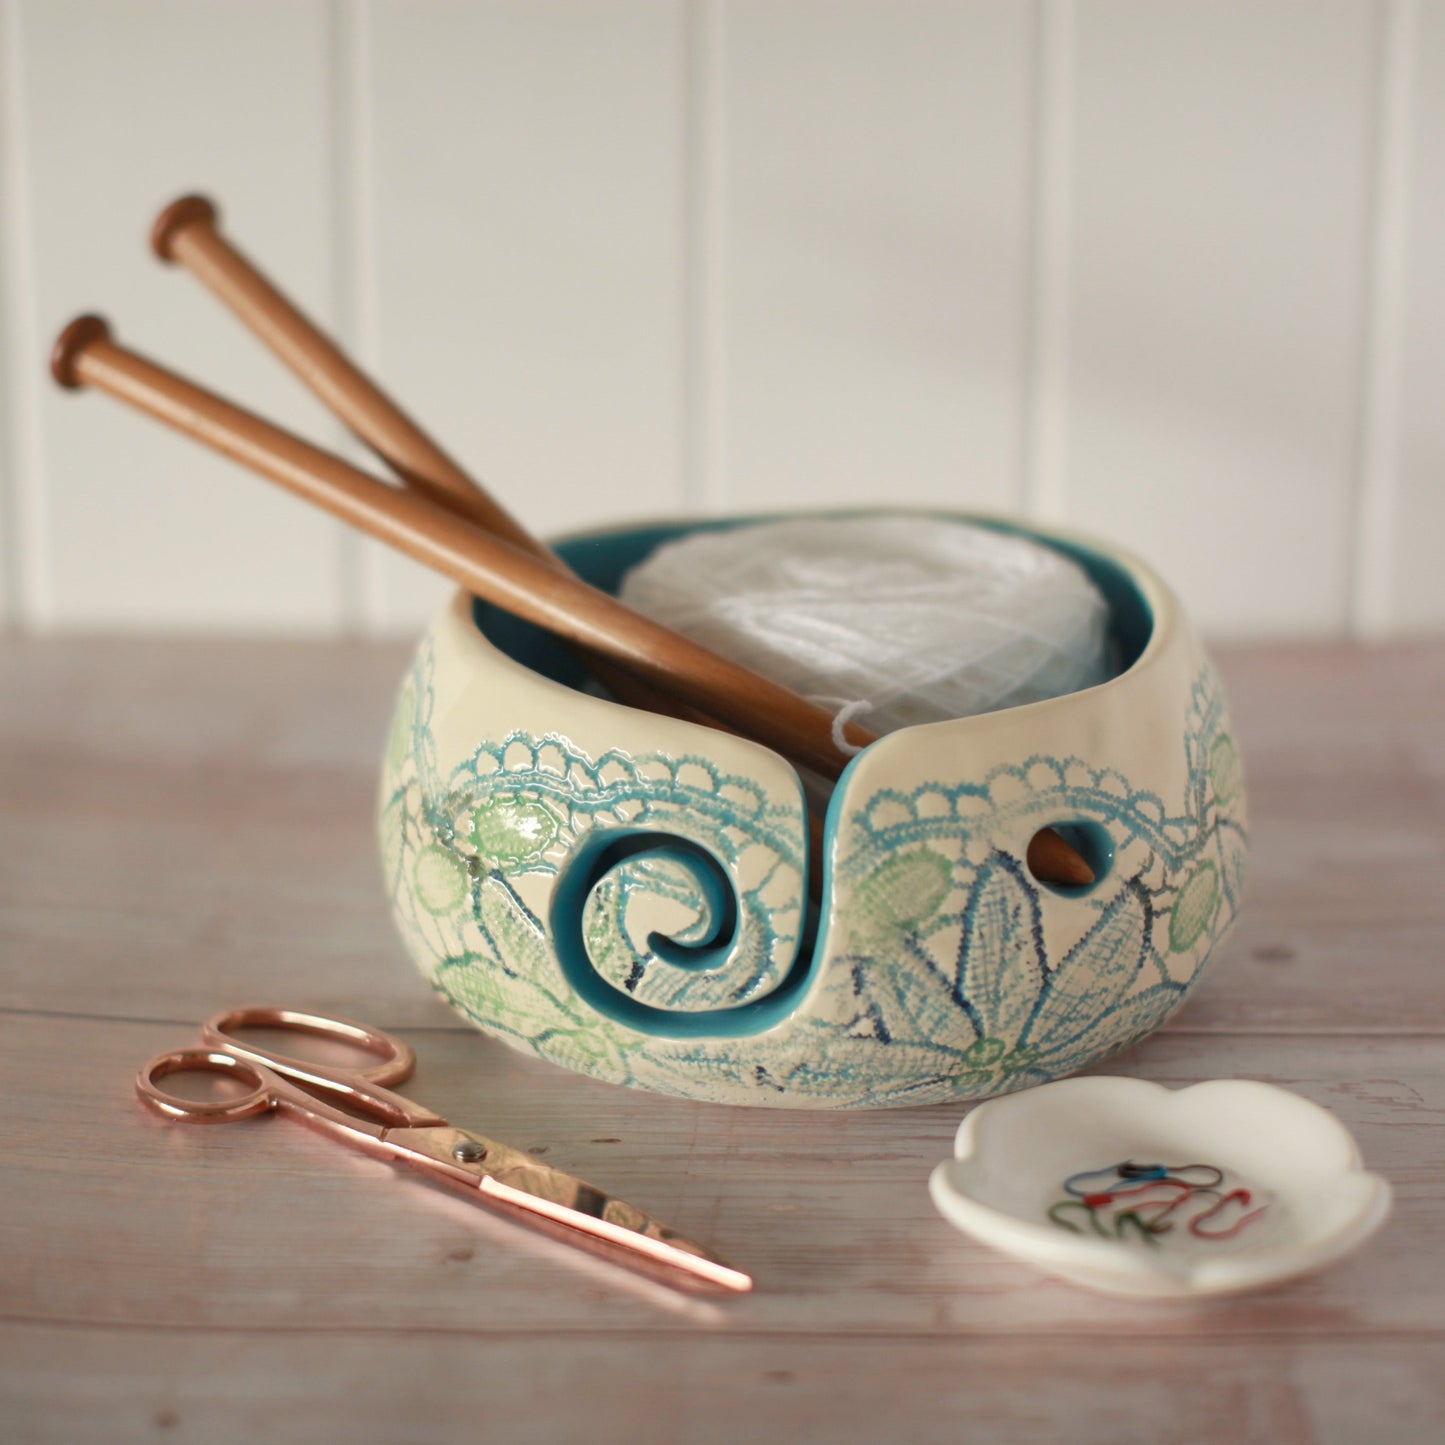 Yarn Bowl - Pressed Lace - White & Blue